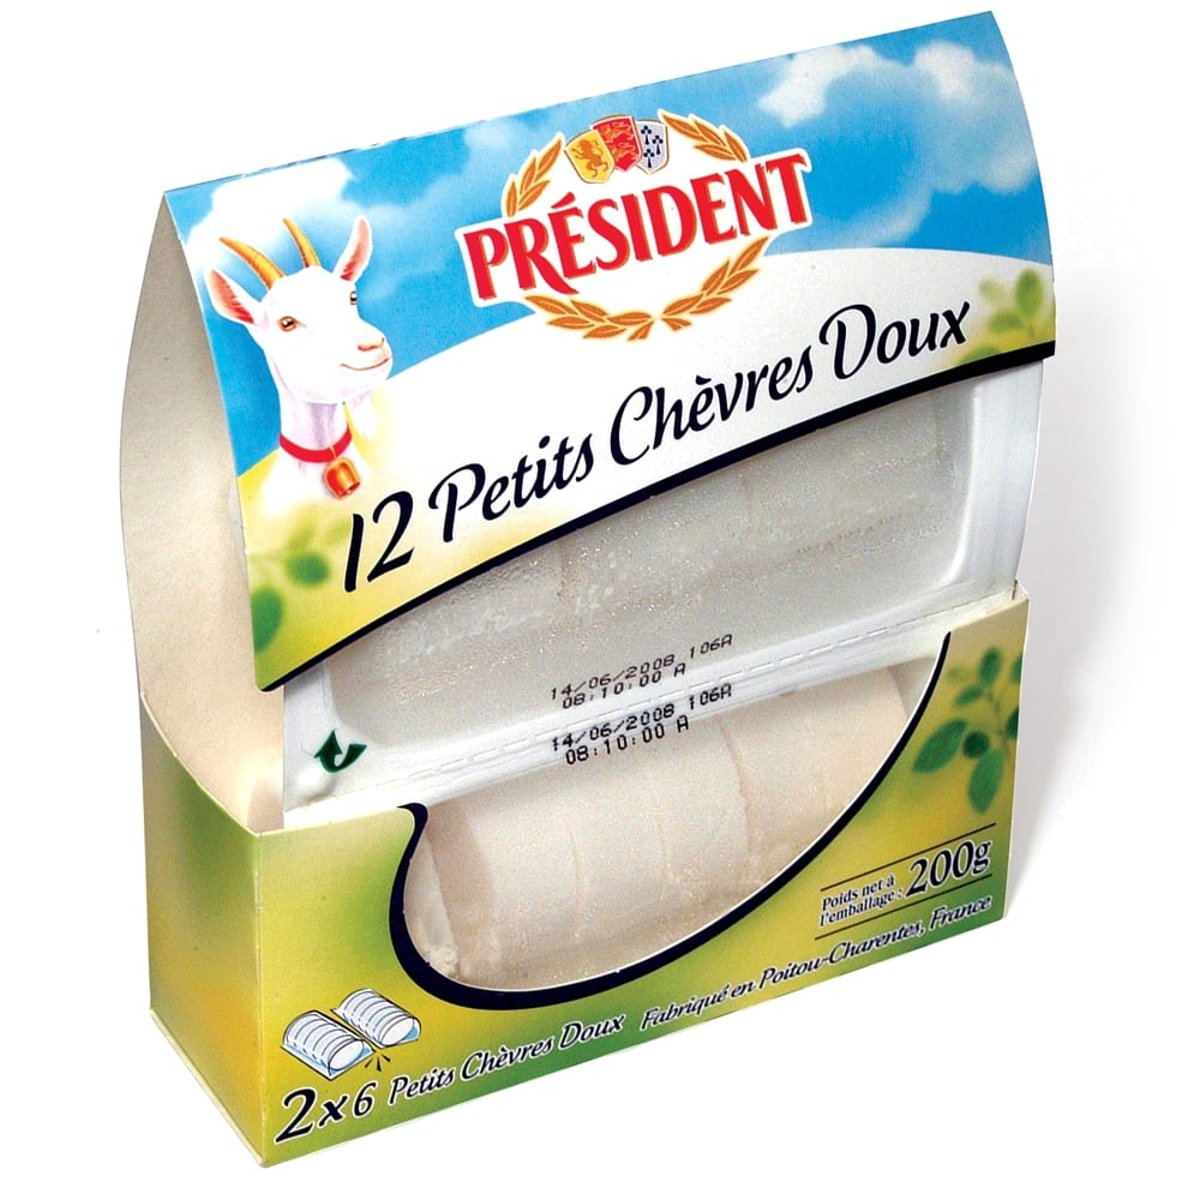 Président 12Petits Chevres Doux kozí sýr